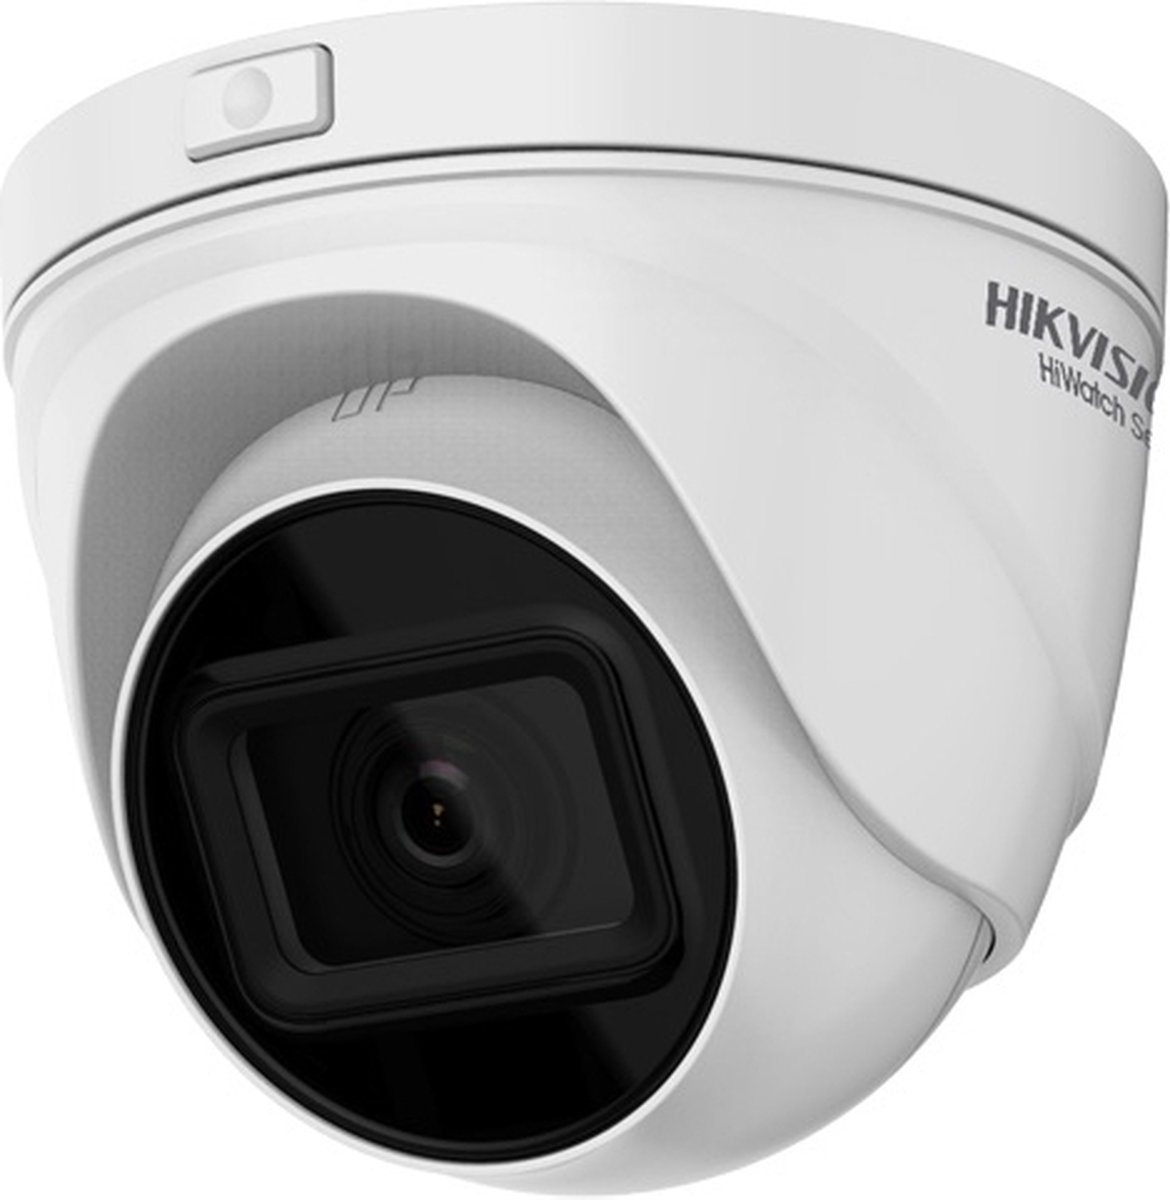 Hikvision HWI-T621H-Z HiWatch Full HD 2MP buiten eyeball met varifocale lens, IR nachtzicht, 120dB WDR, PoE - Beveiligingscamera IP camera bewakingscamera camerabewaking veiligheidscamera beveiliging netwerk camera webcam